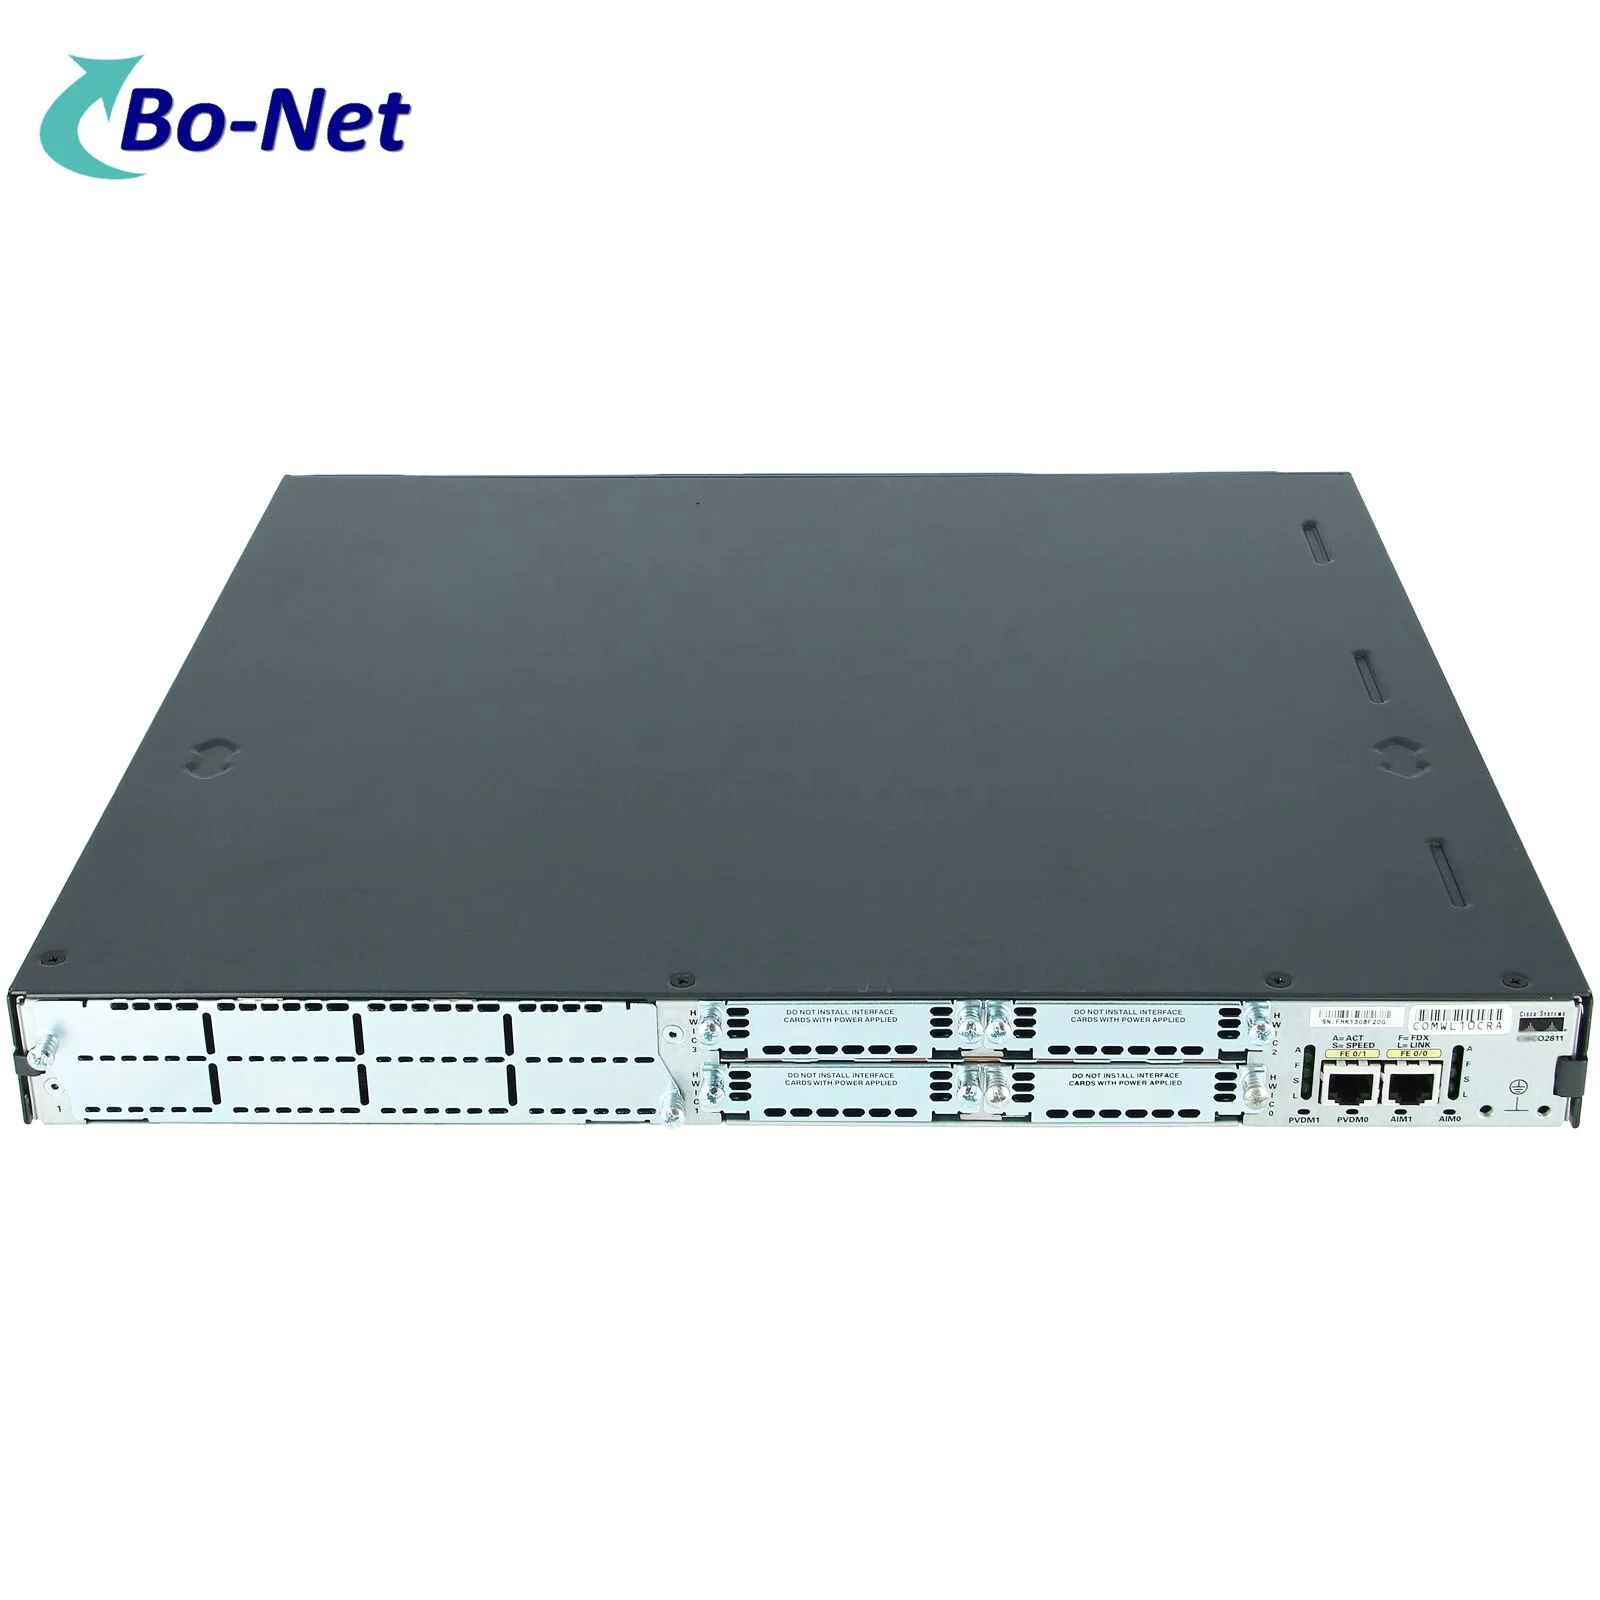 100% Original Used 2811 Router 2800 Series Enterprise Router